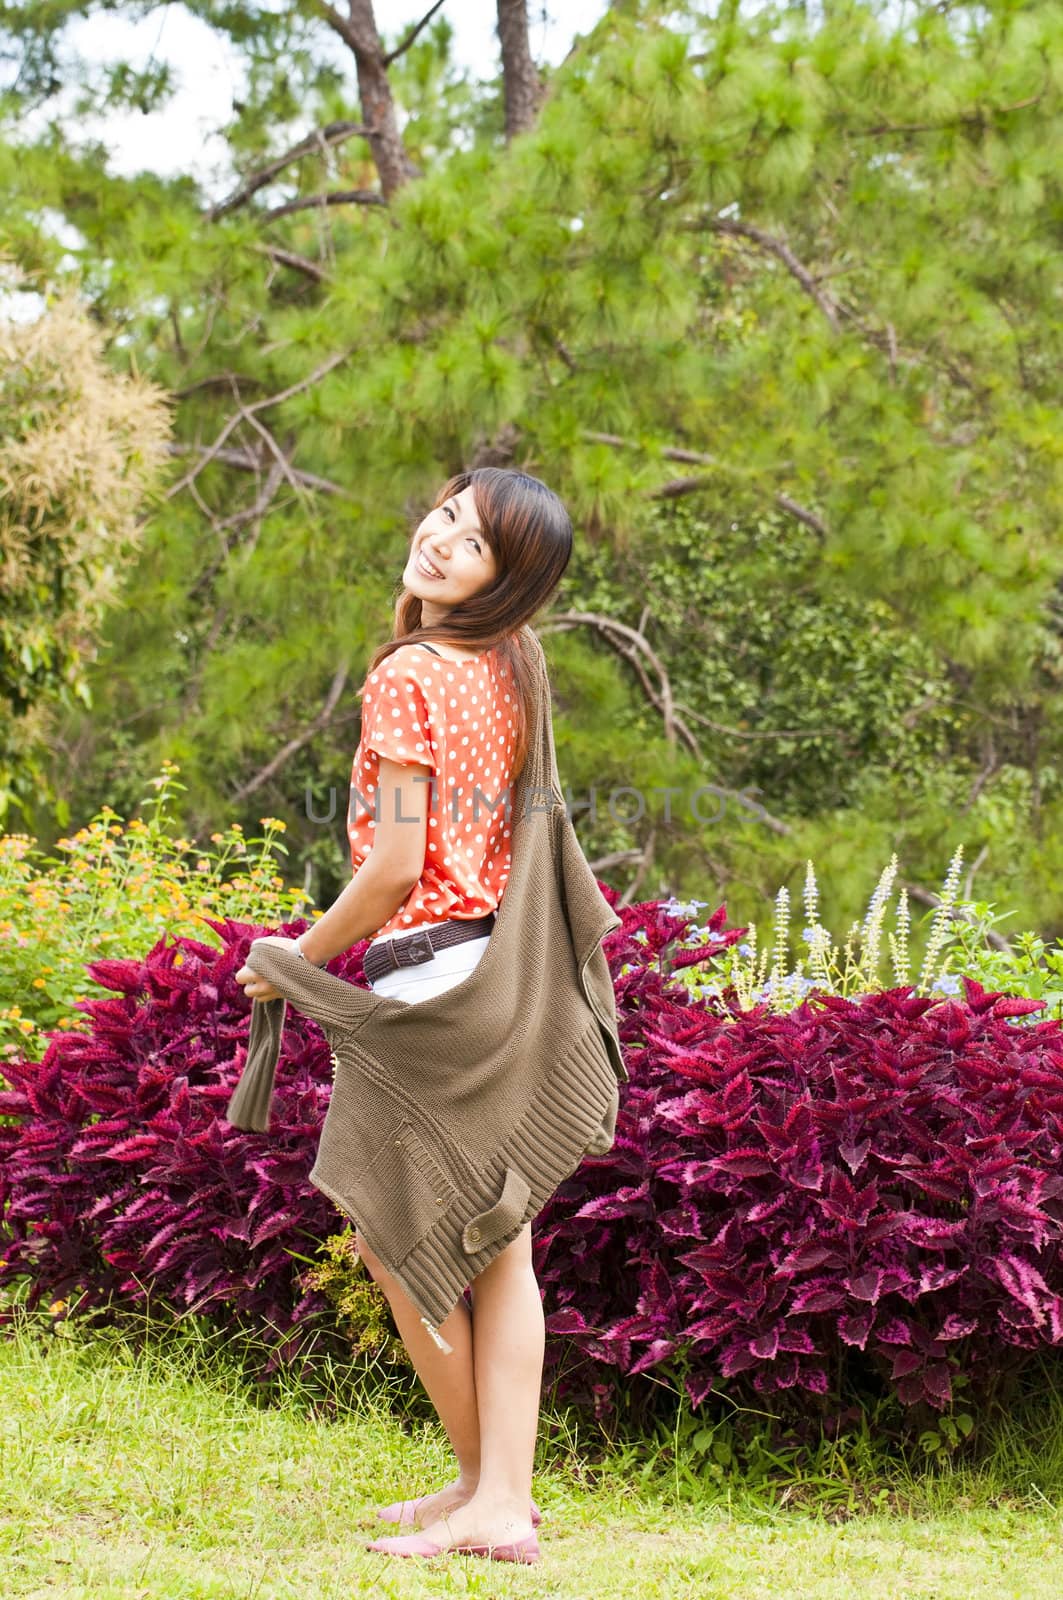 Portrait Of Asian Young Woman In garden by Yuri2012